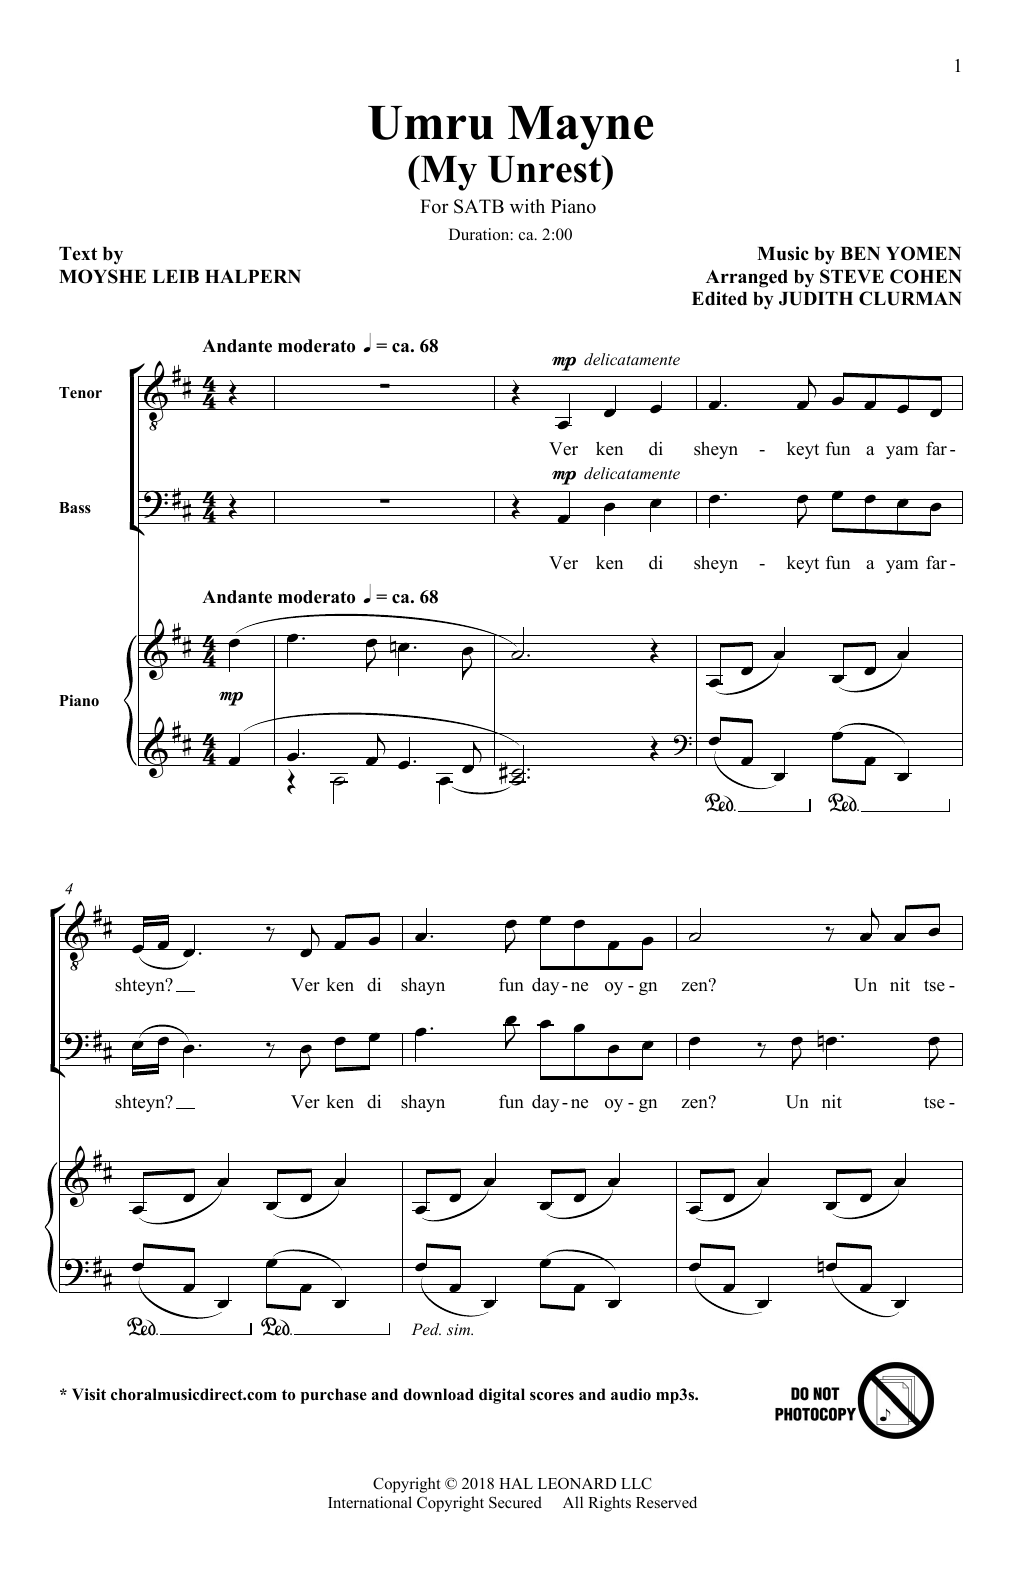 Ben Yomen Umru Mayne (My Unrest) (arr. Steve Cohen) sheet music notes and chords arranged for SATB Choir